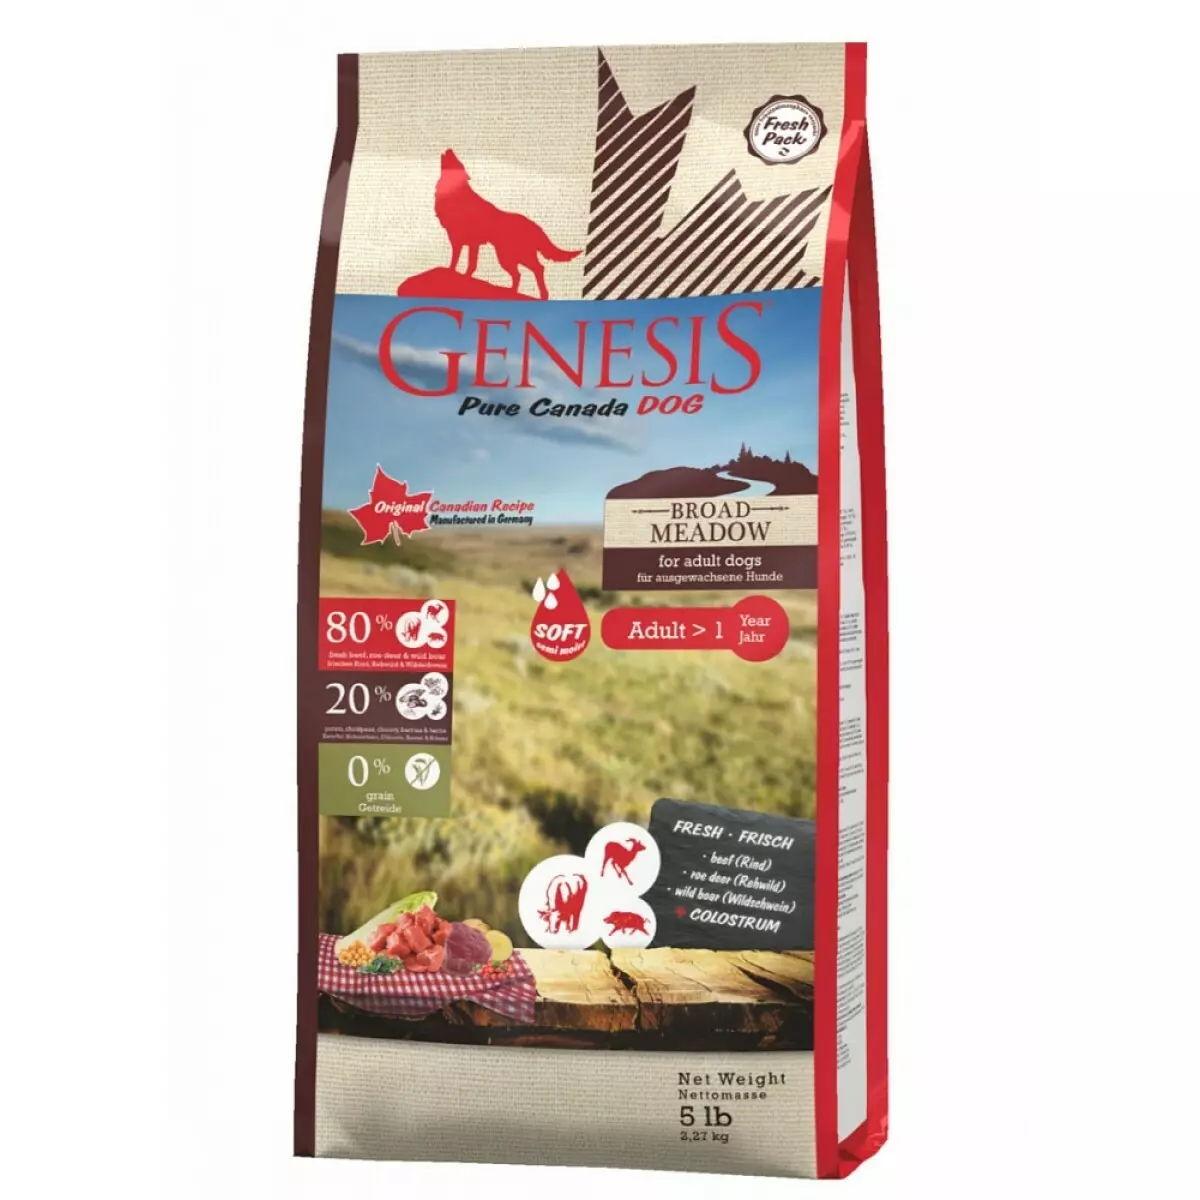 Henesis خالص کینیڈا فیڈ: کتوں اور بلیوں کے لئے، بلی کے بچے اور puppies کے لئے خشک خوراک کی ساخت، مالکان کی رینج اور جائزے کا ایک جائزہ 22741_21